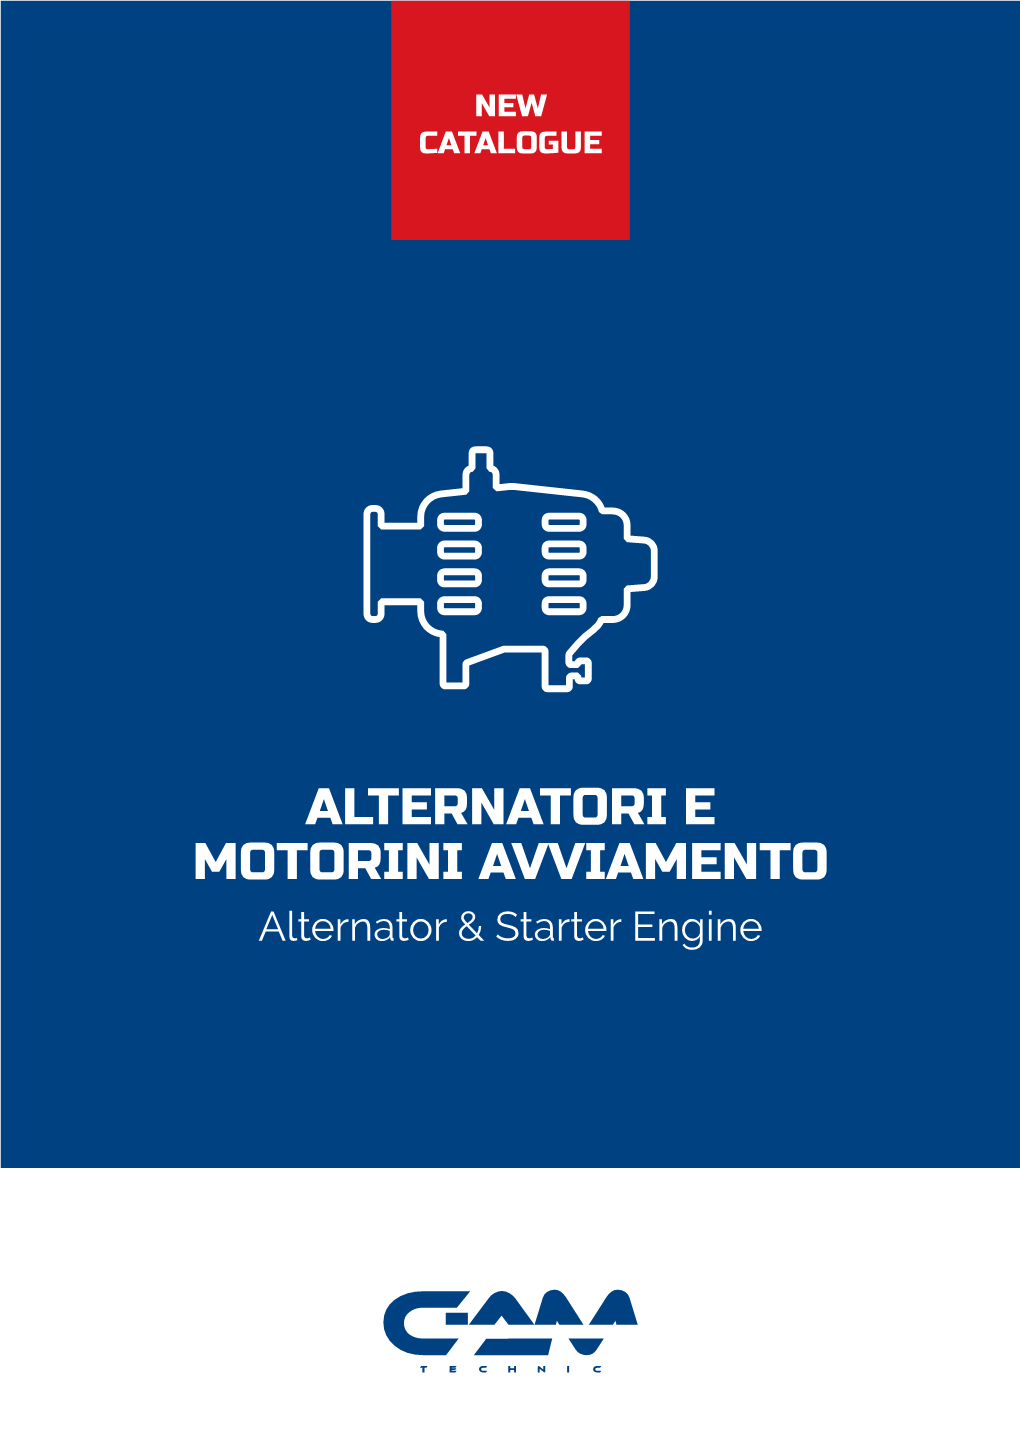 ALTERNATORI E MOTORINI AVVIAMENTO Alternator & Starter Engine a ALTERNATORI E MOTORINI AVVIAMENTO ALTERNATOR & STARTER ENGINE